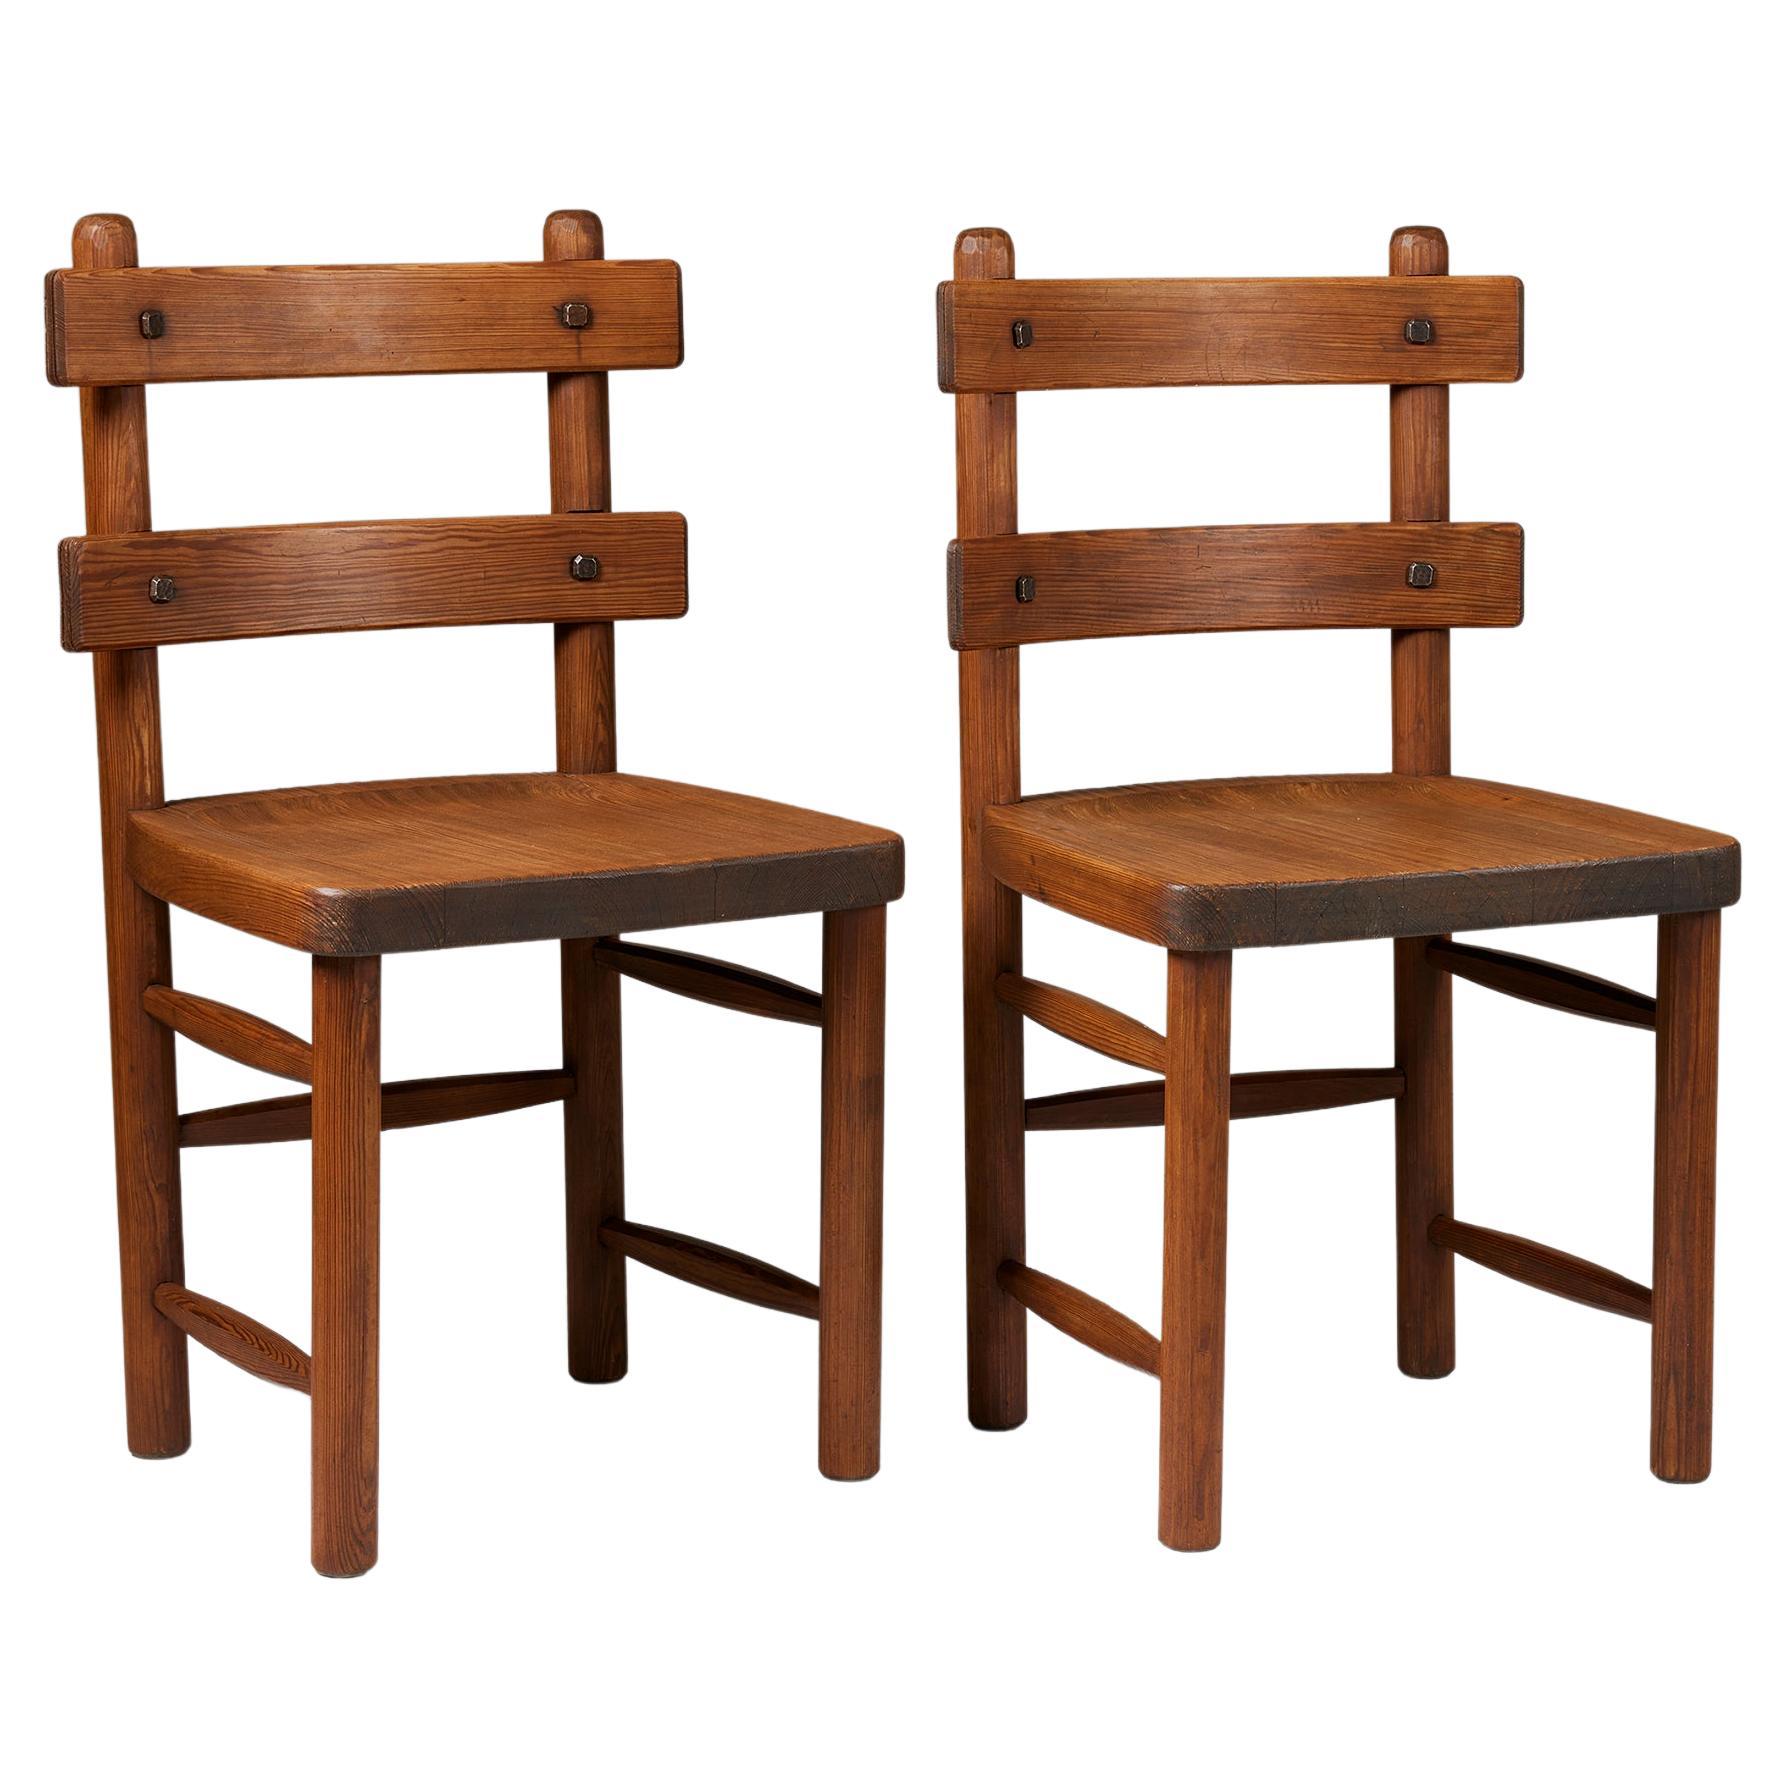 Pair of ‘Sandhamn’ Chairs Designed by Axel Einar Hjorth for Nordiska Kompaniet